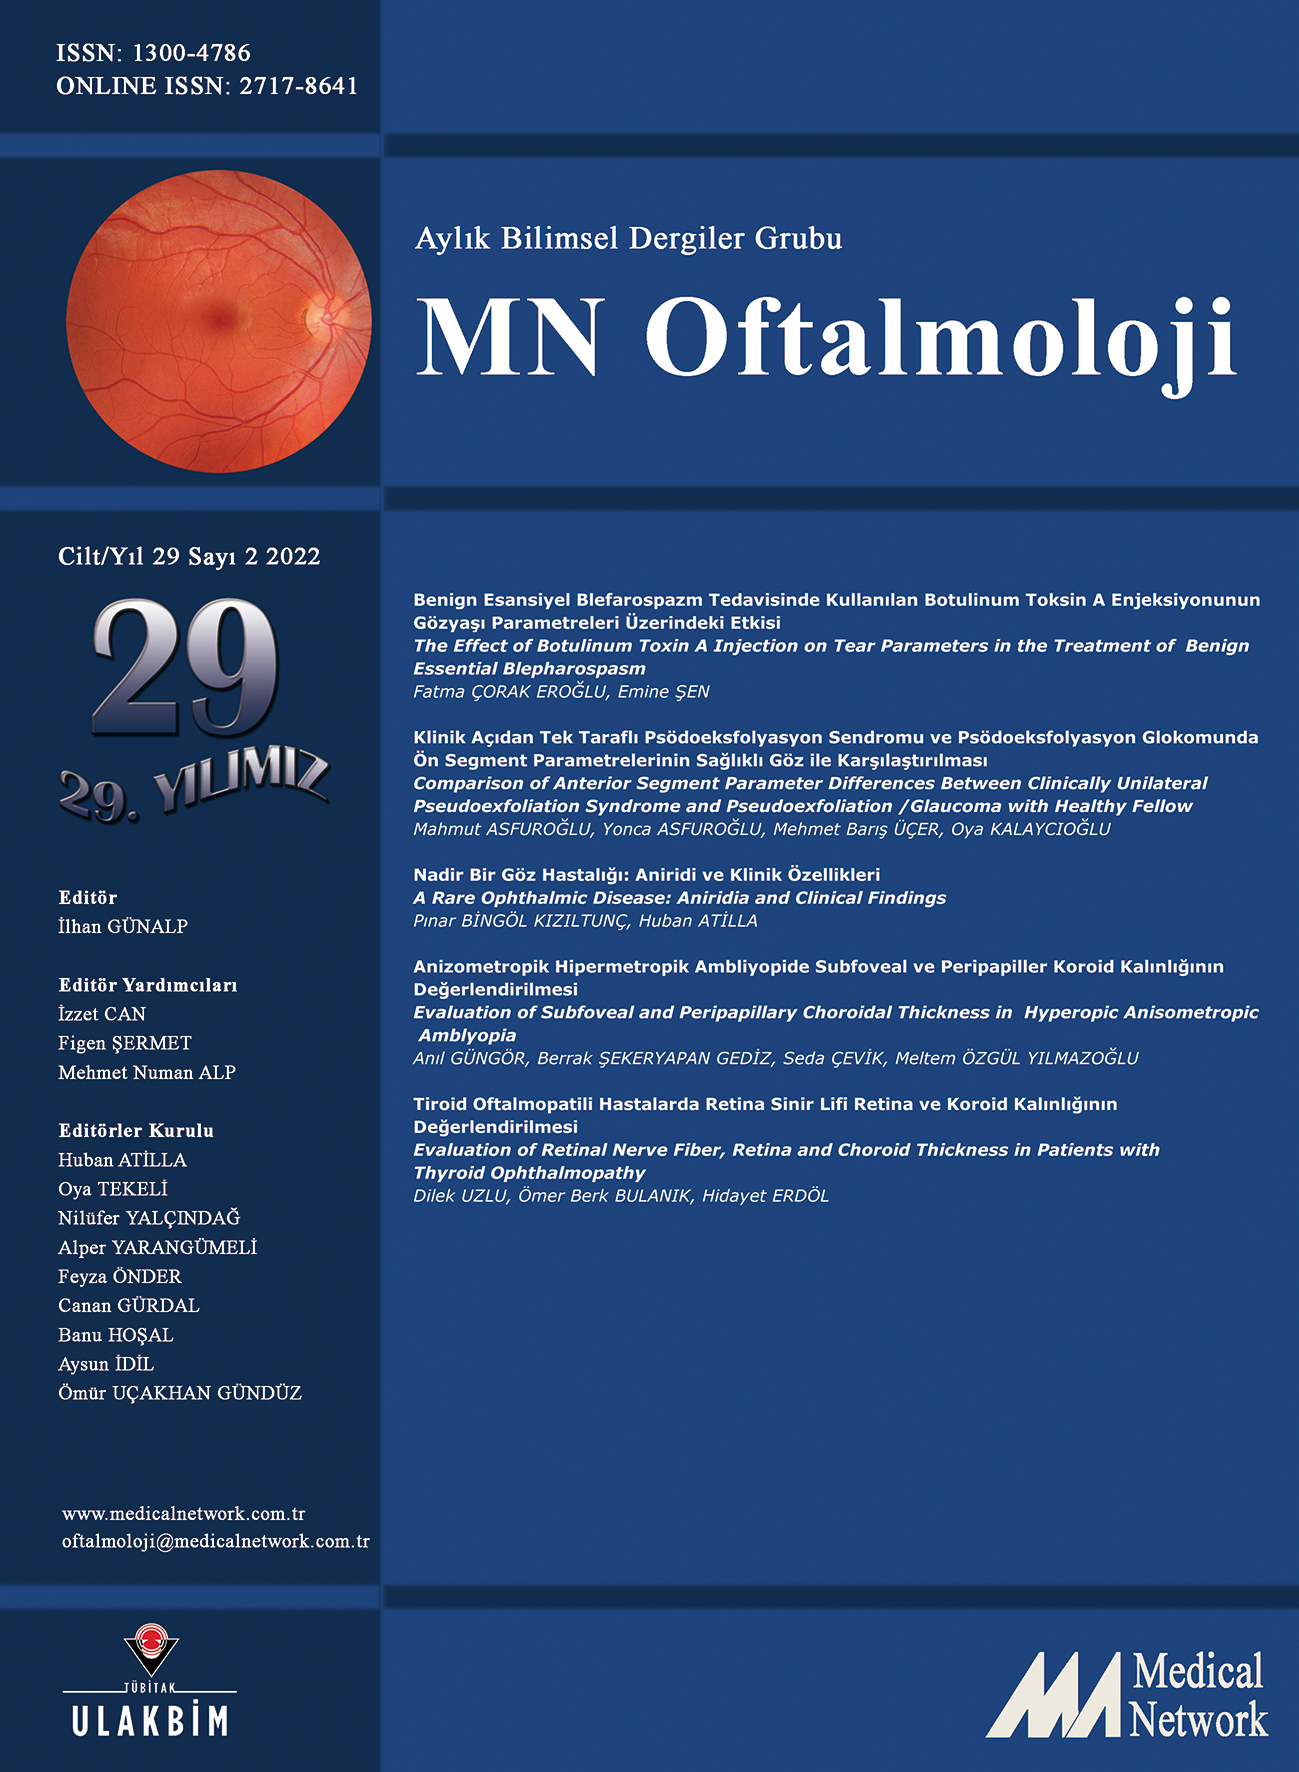 <p>MN Oftalmoloji Cilt: 29 Say: 2 2022 (MN Ophthalmology Volume: 29 No: 2 2022)</p>